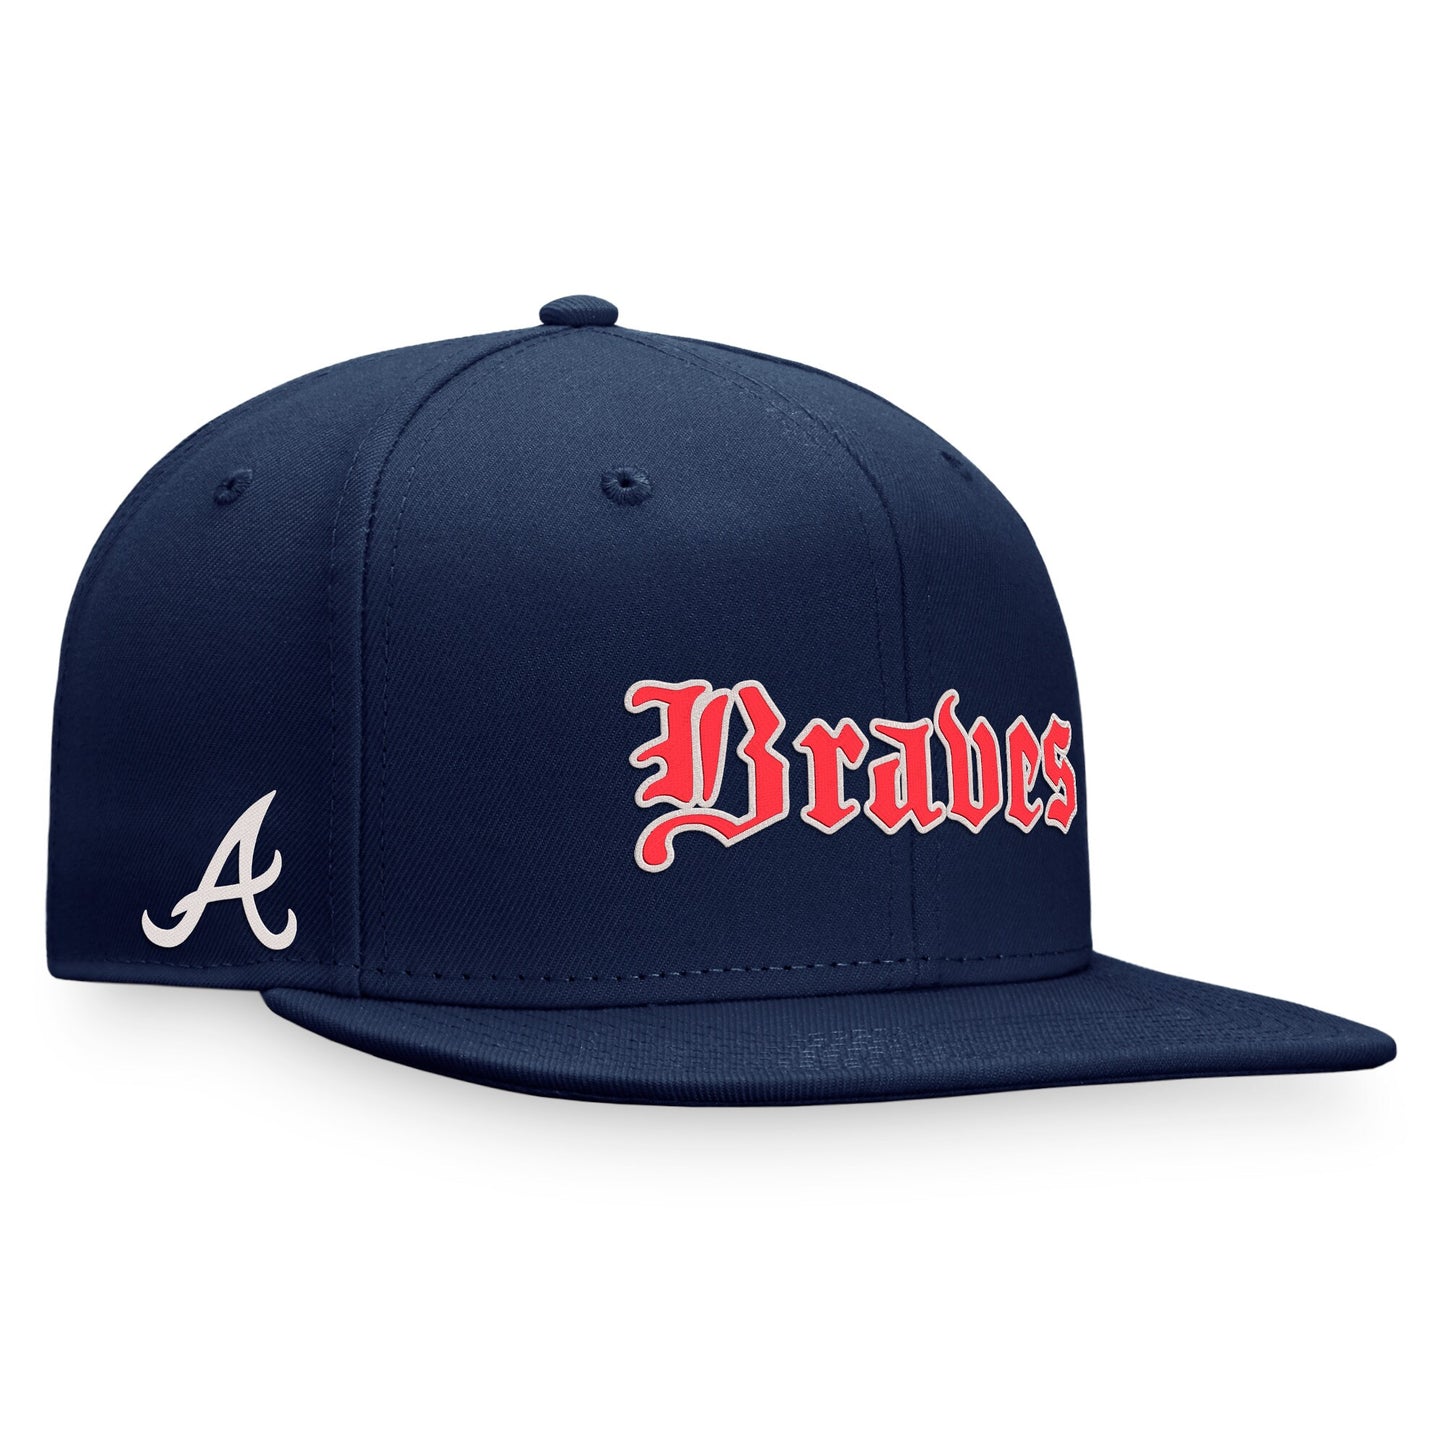 Atlanta Braves Fanatics Branded Gothic Script Fitted Hat - Navy